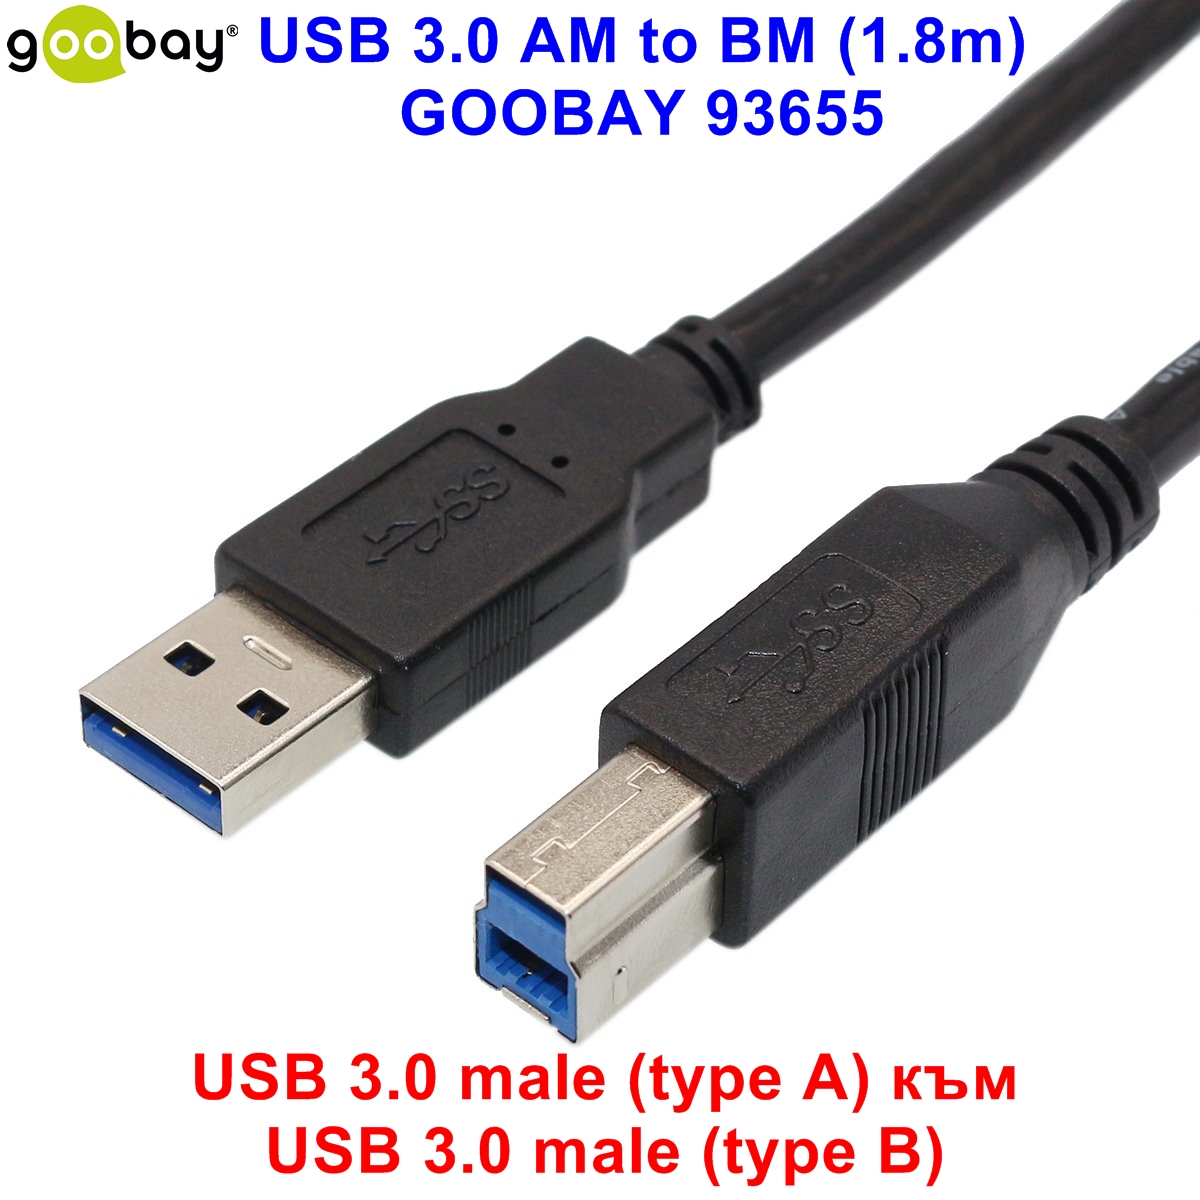 USB 3.0 AM to BM (1.8m) GOOBAY 93655